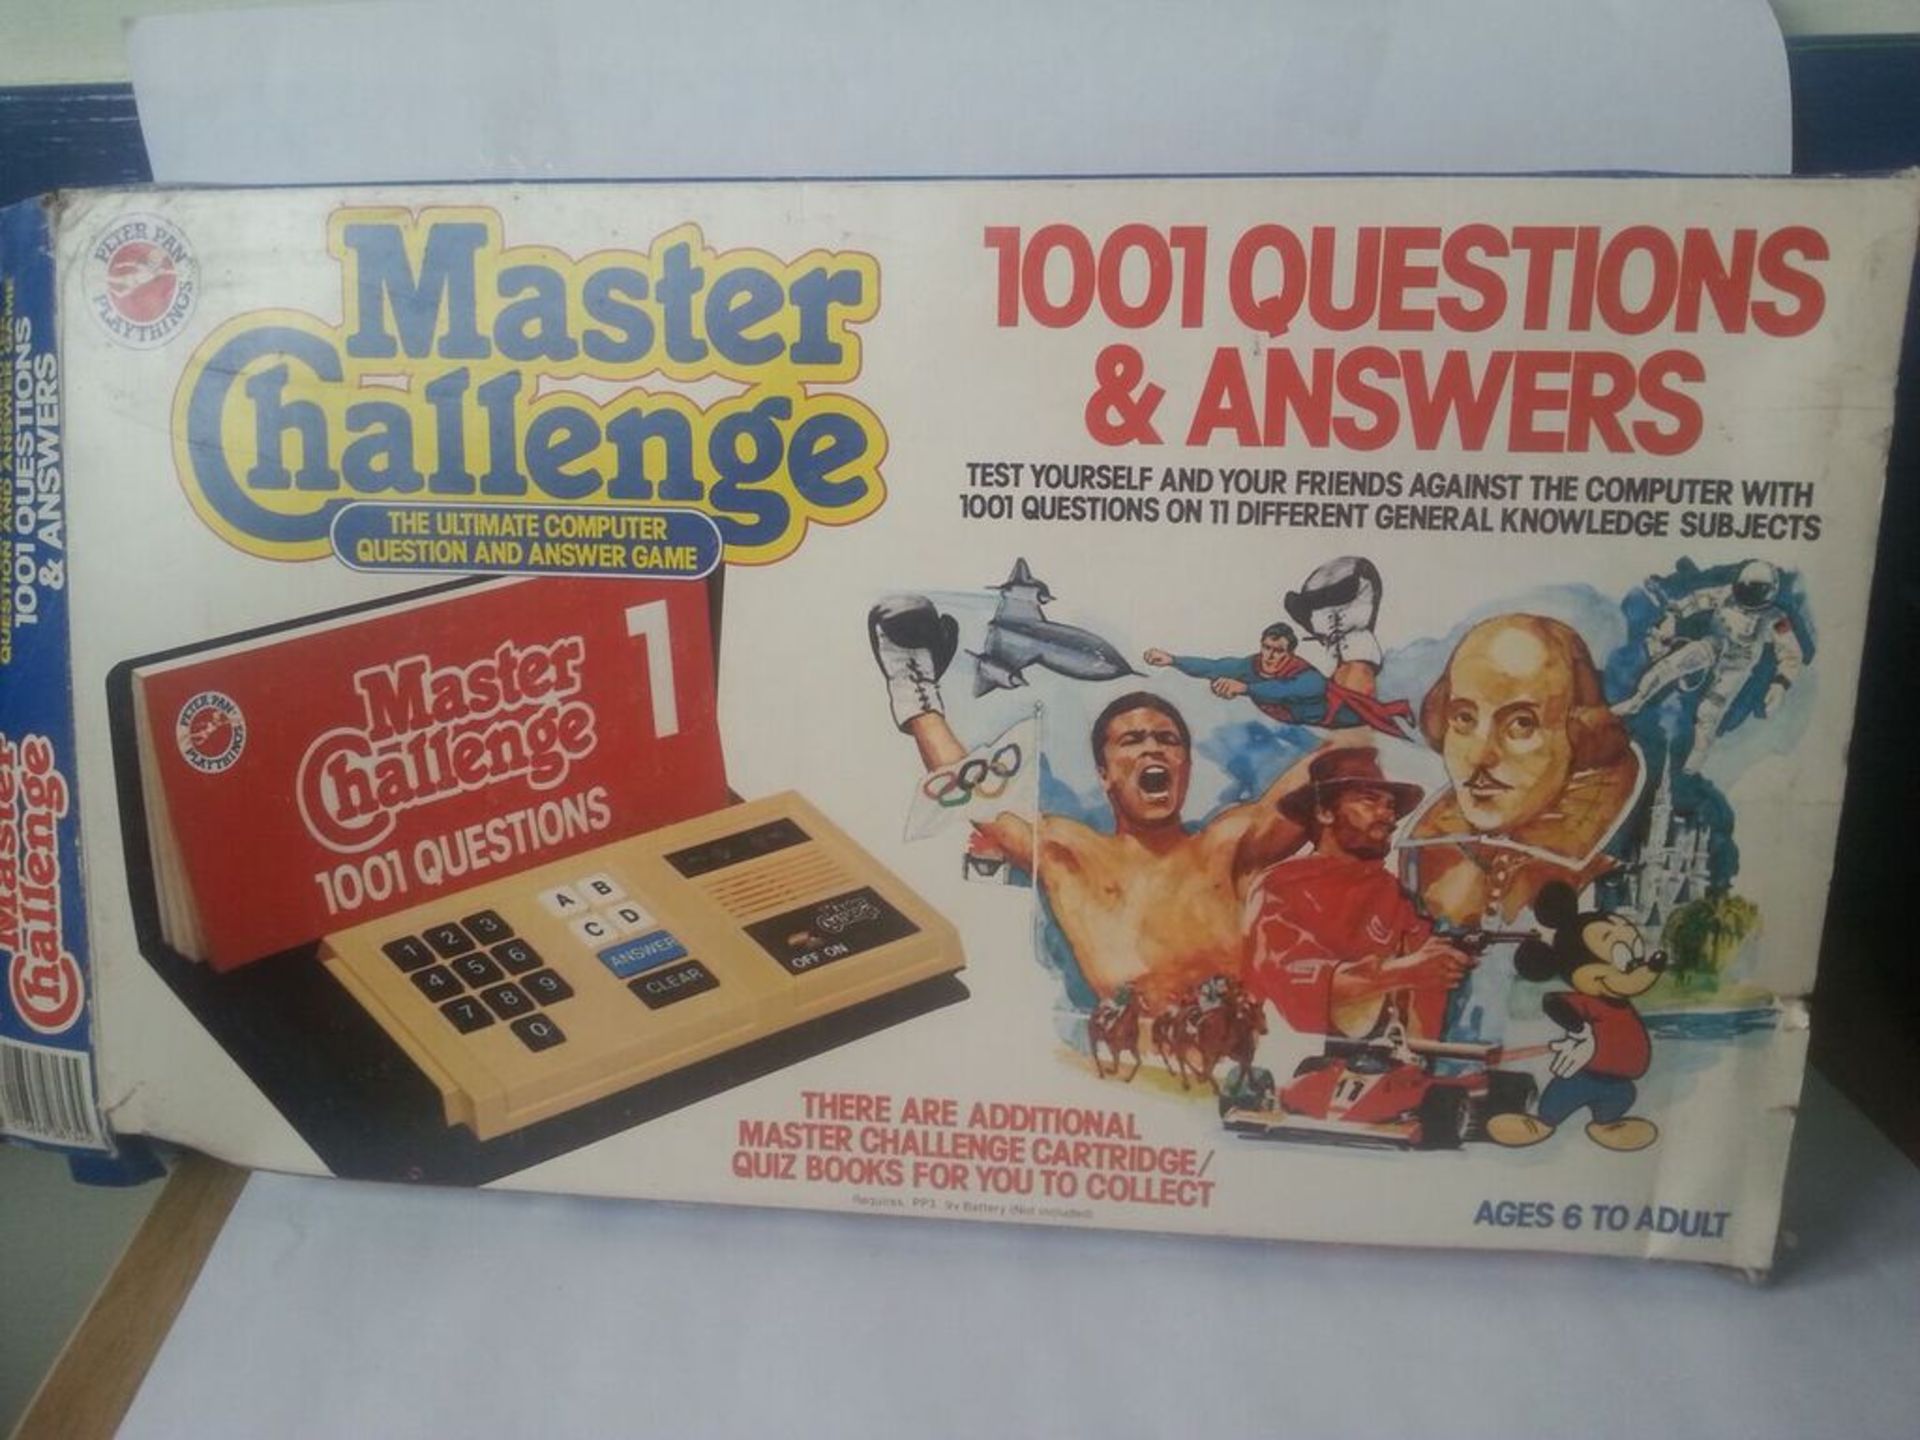 Retro "Master Challenge" game